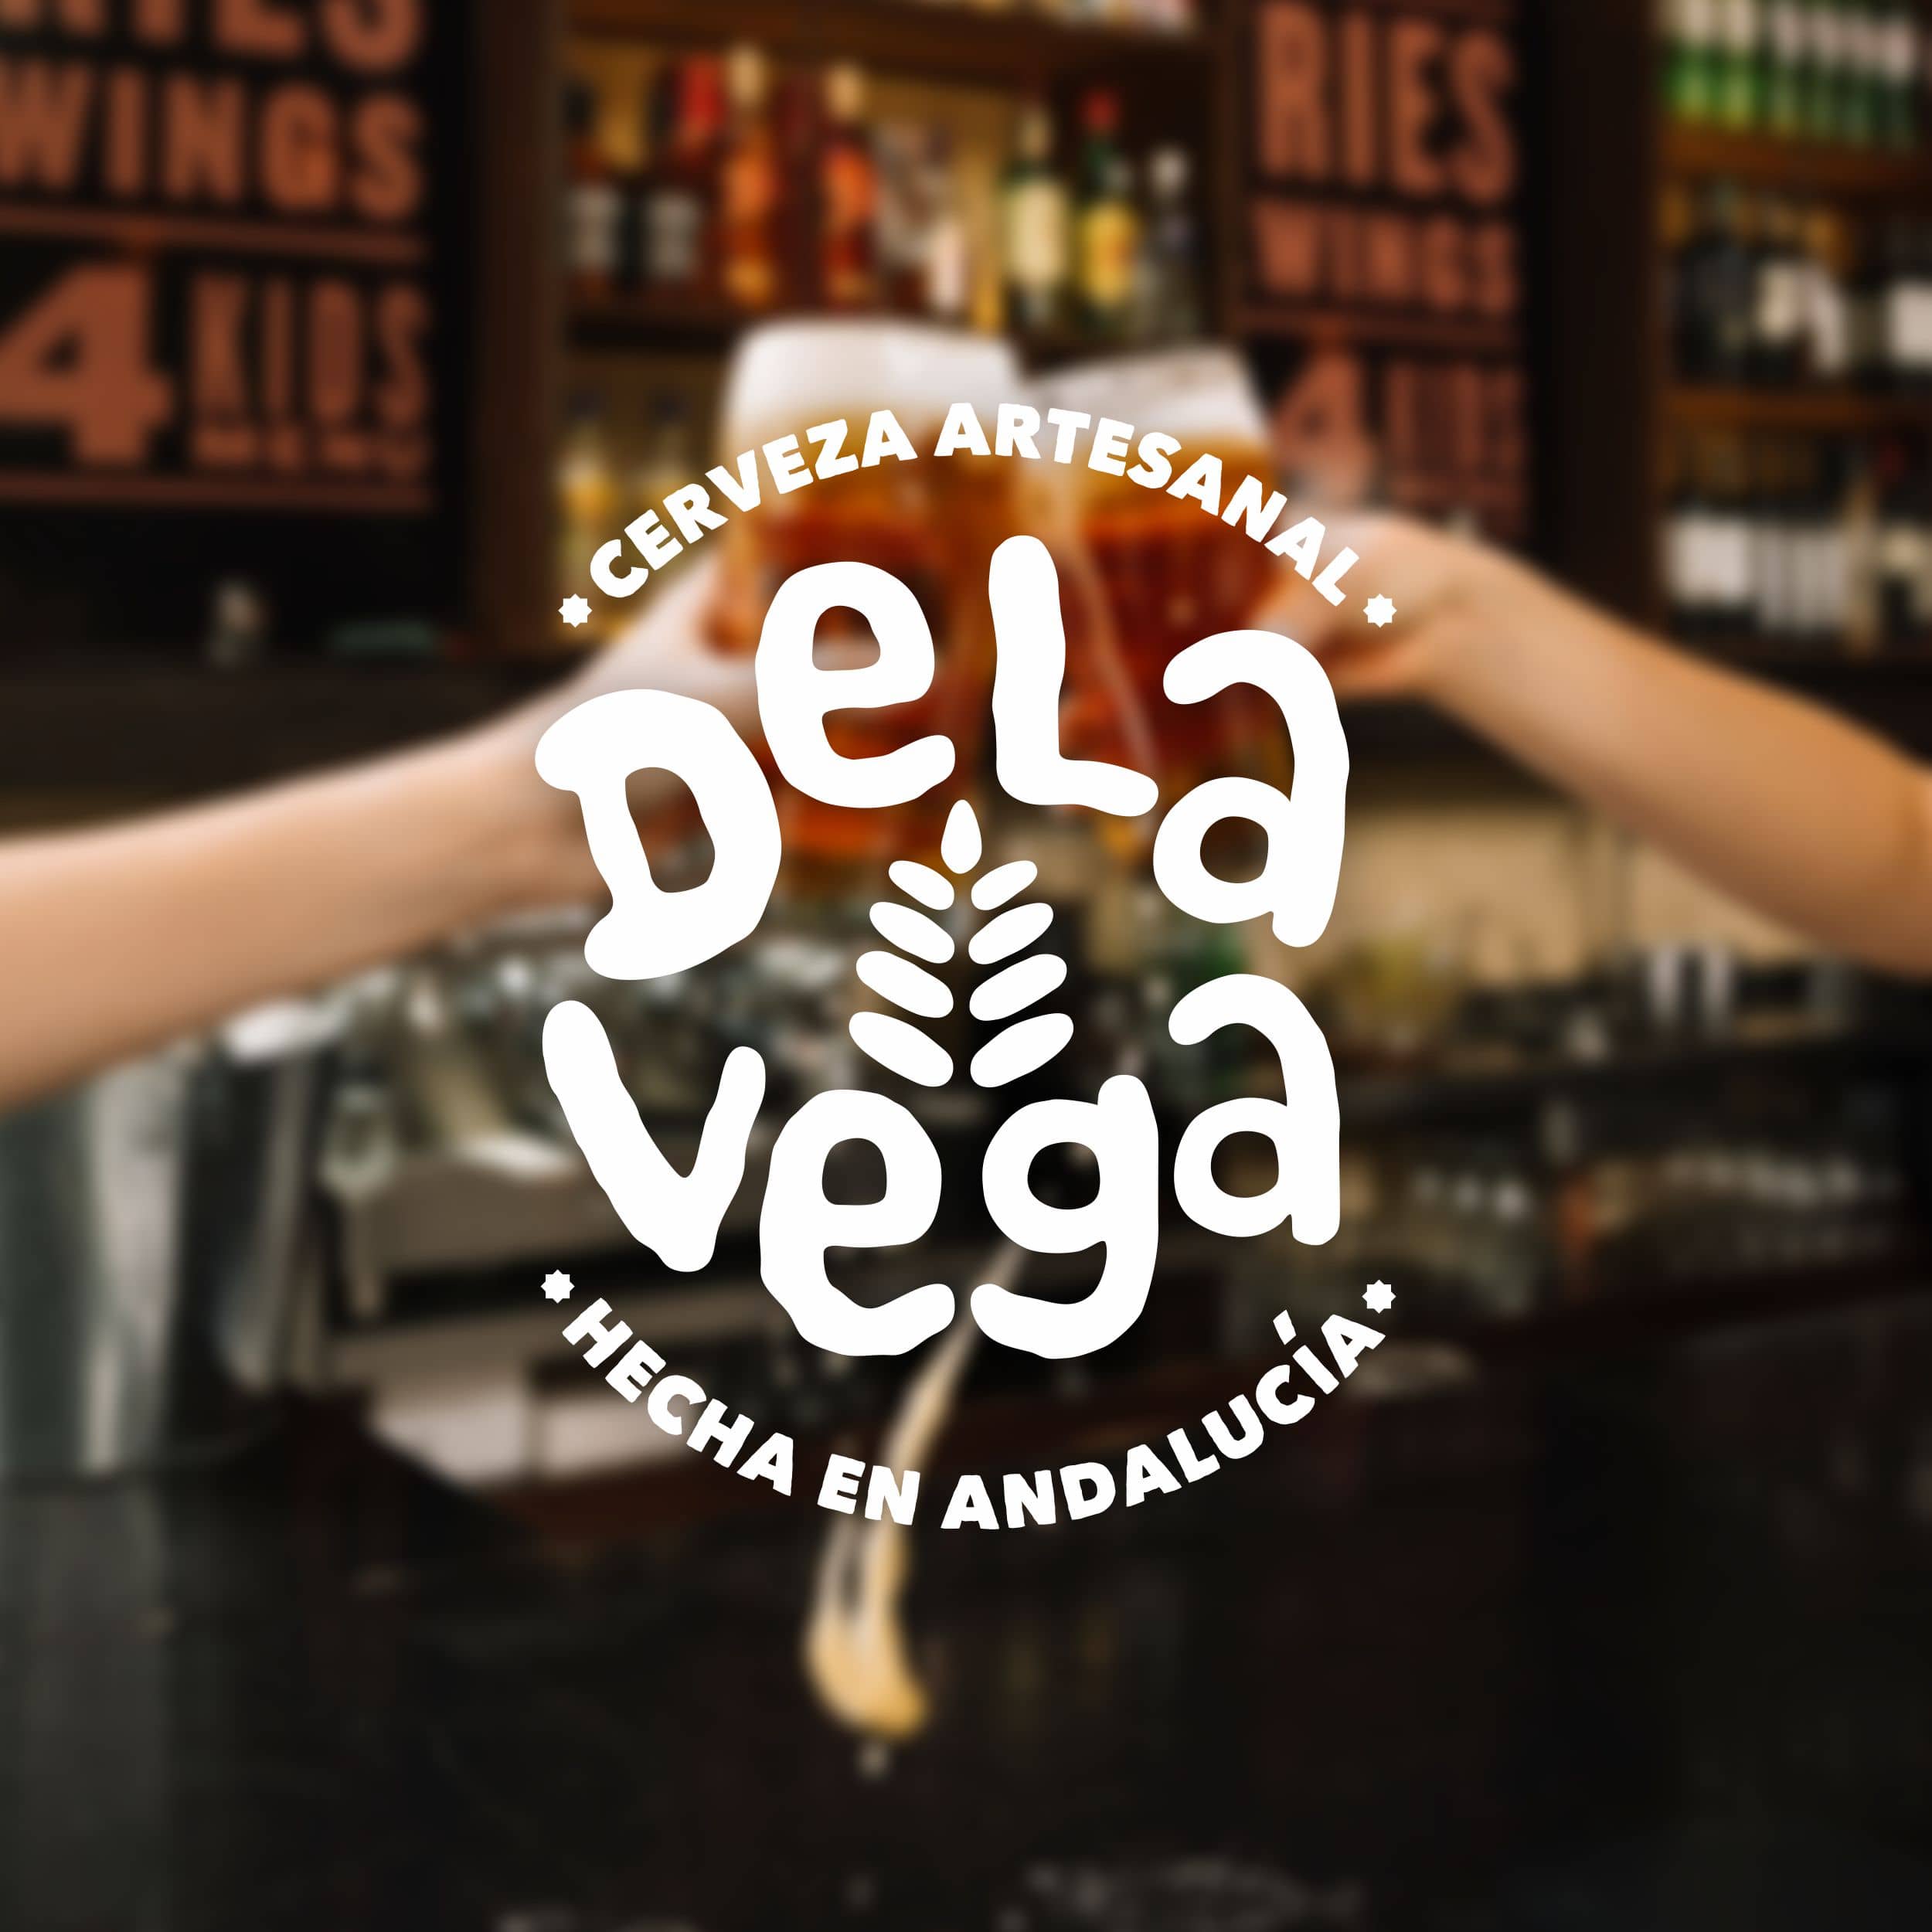 Logotipo cerveza artesanal De la Vega hecha en andalucía